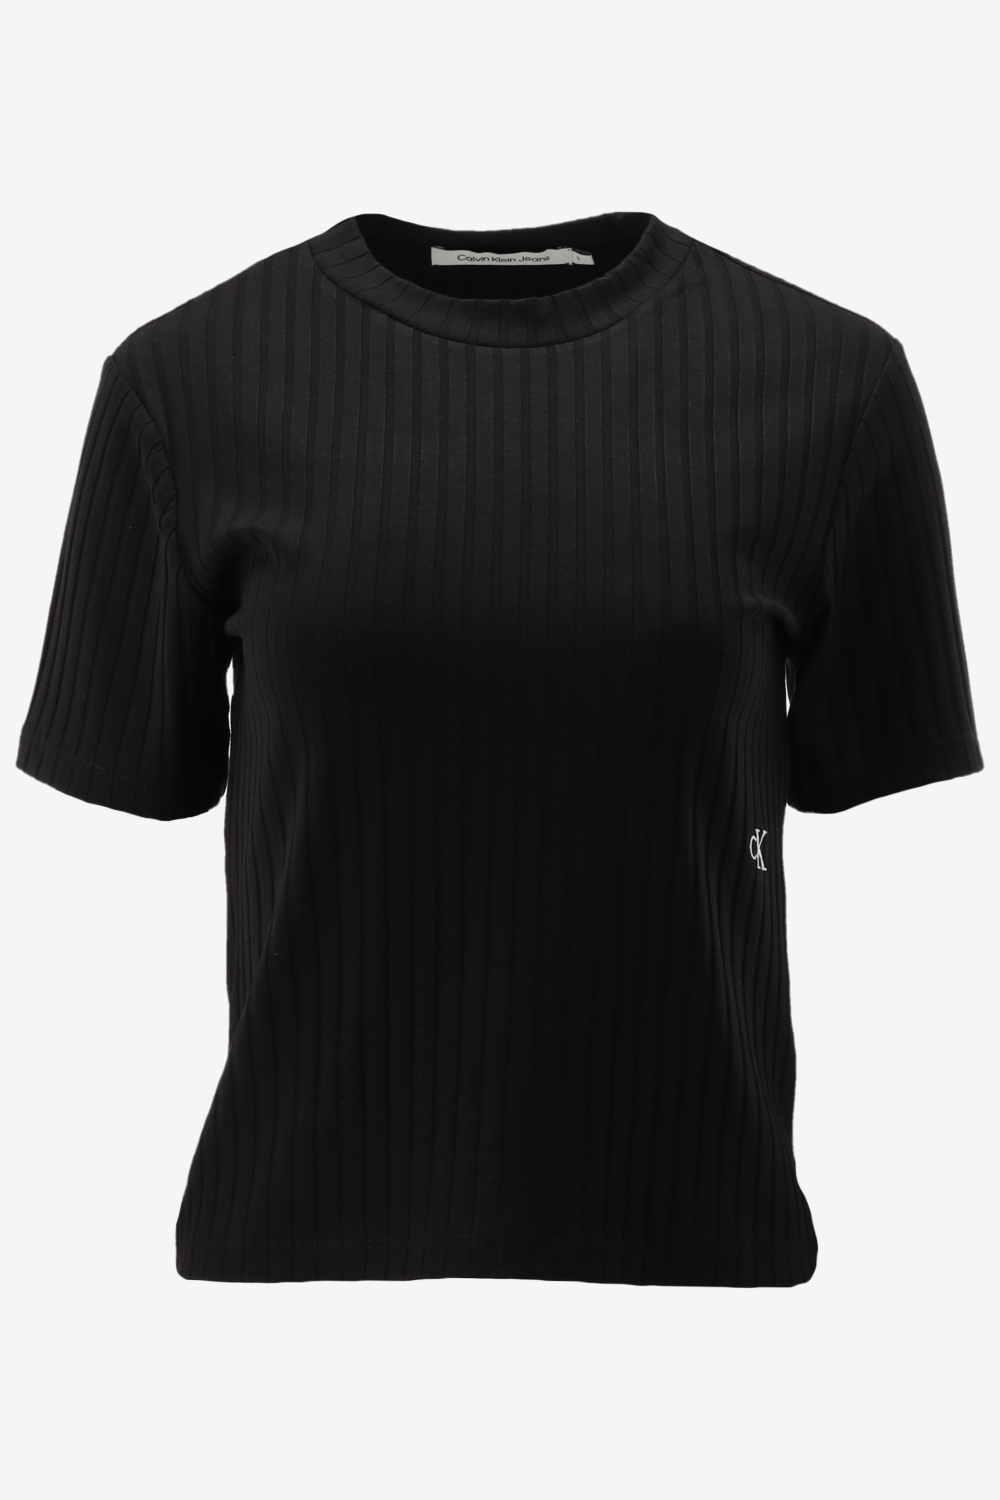 Calvin Klein Rib Short Sleeve Tee Tops & T-shirts Dames - Shirt - Zwart - Maat XS